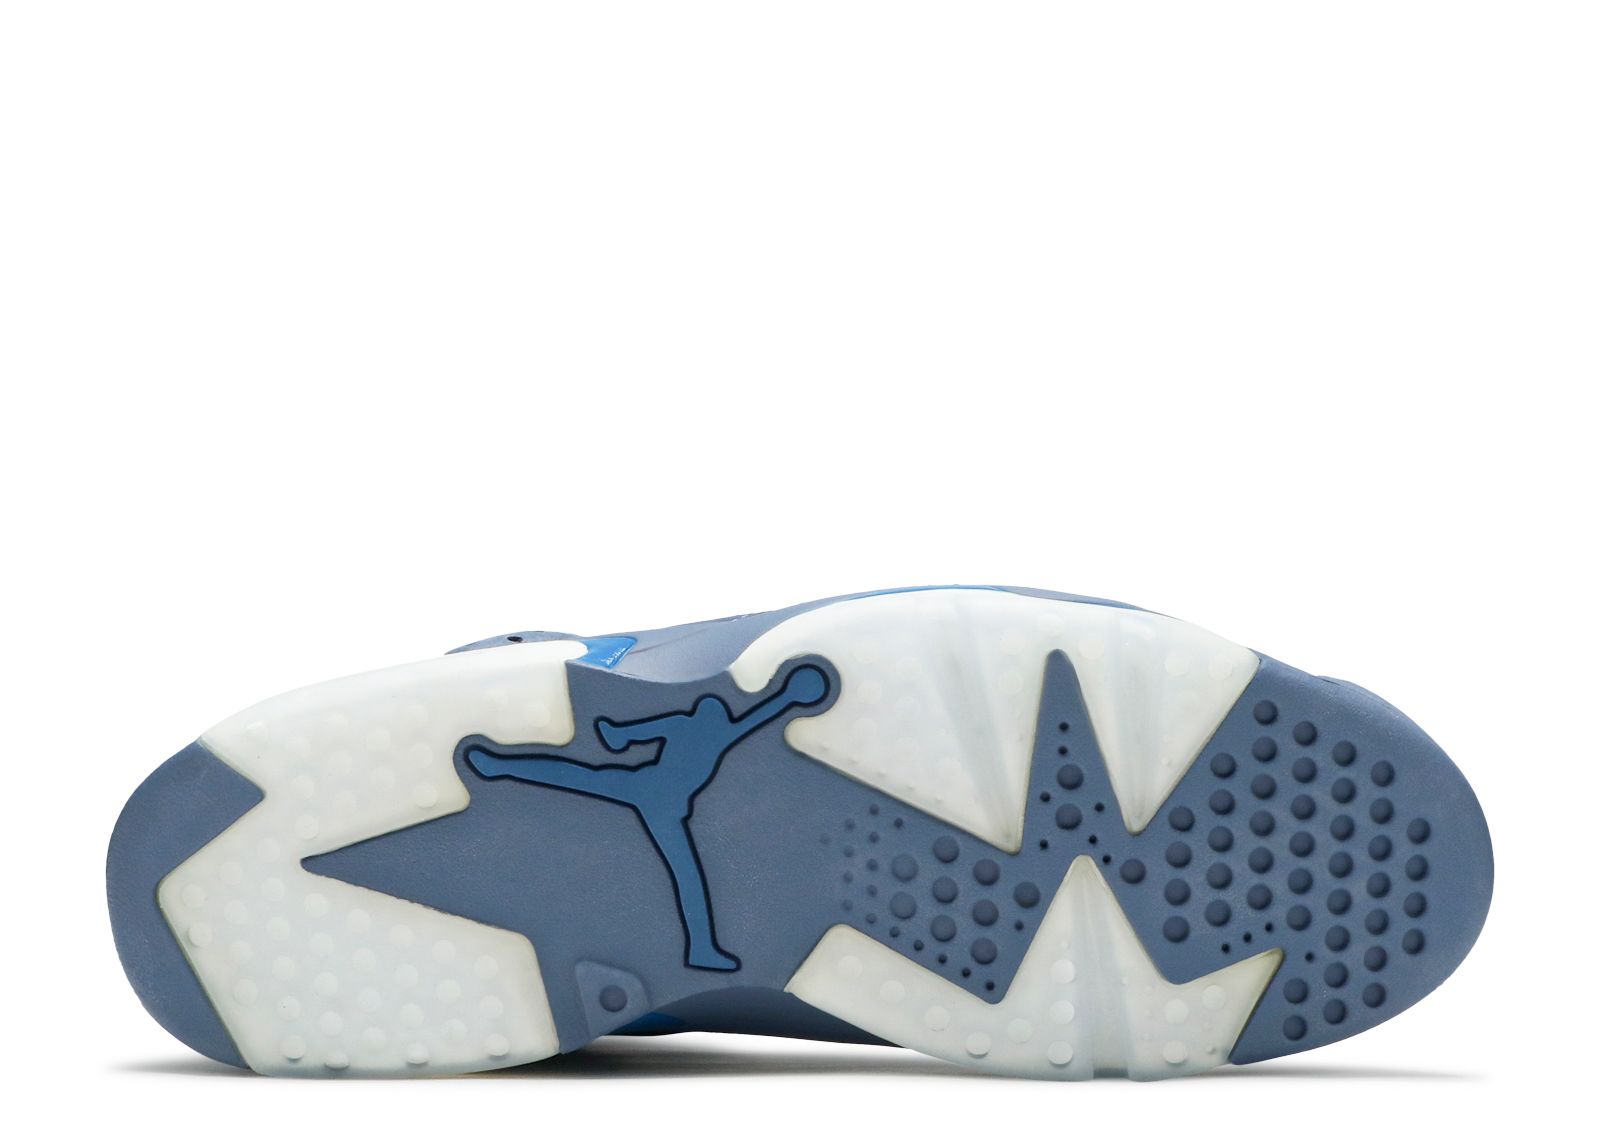 jordan 6 retro diffused blue men's shoe